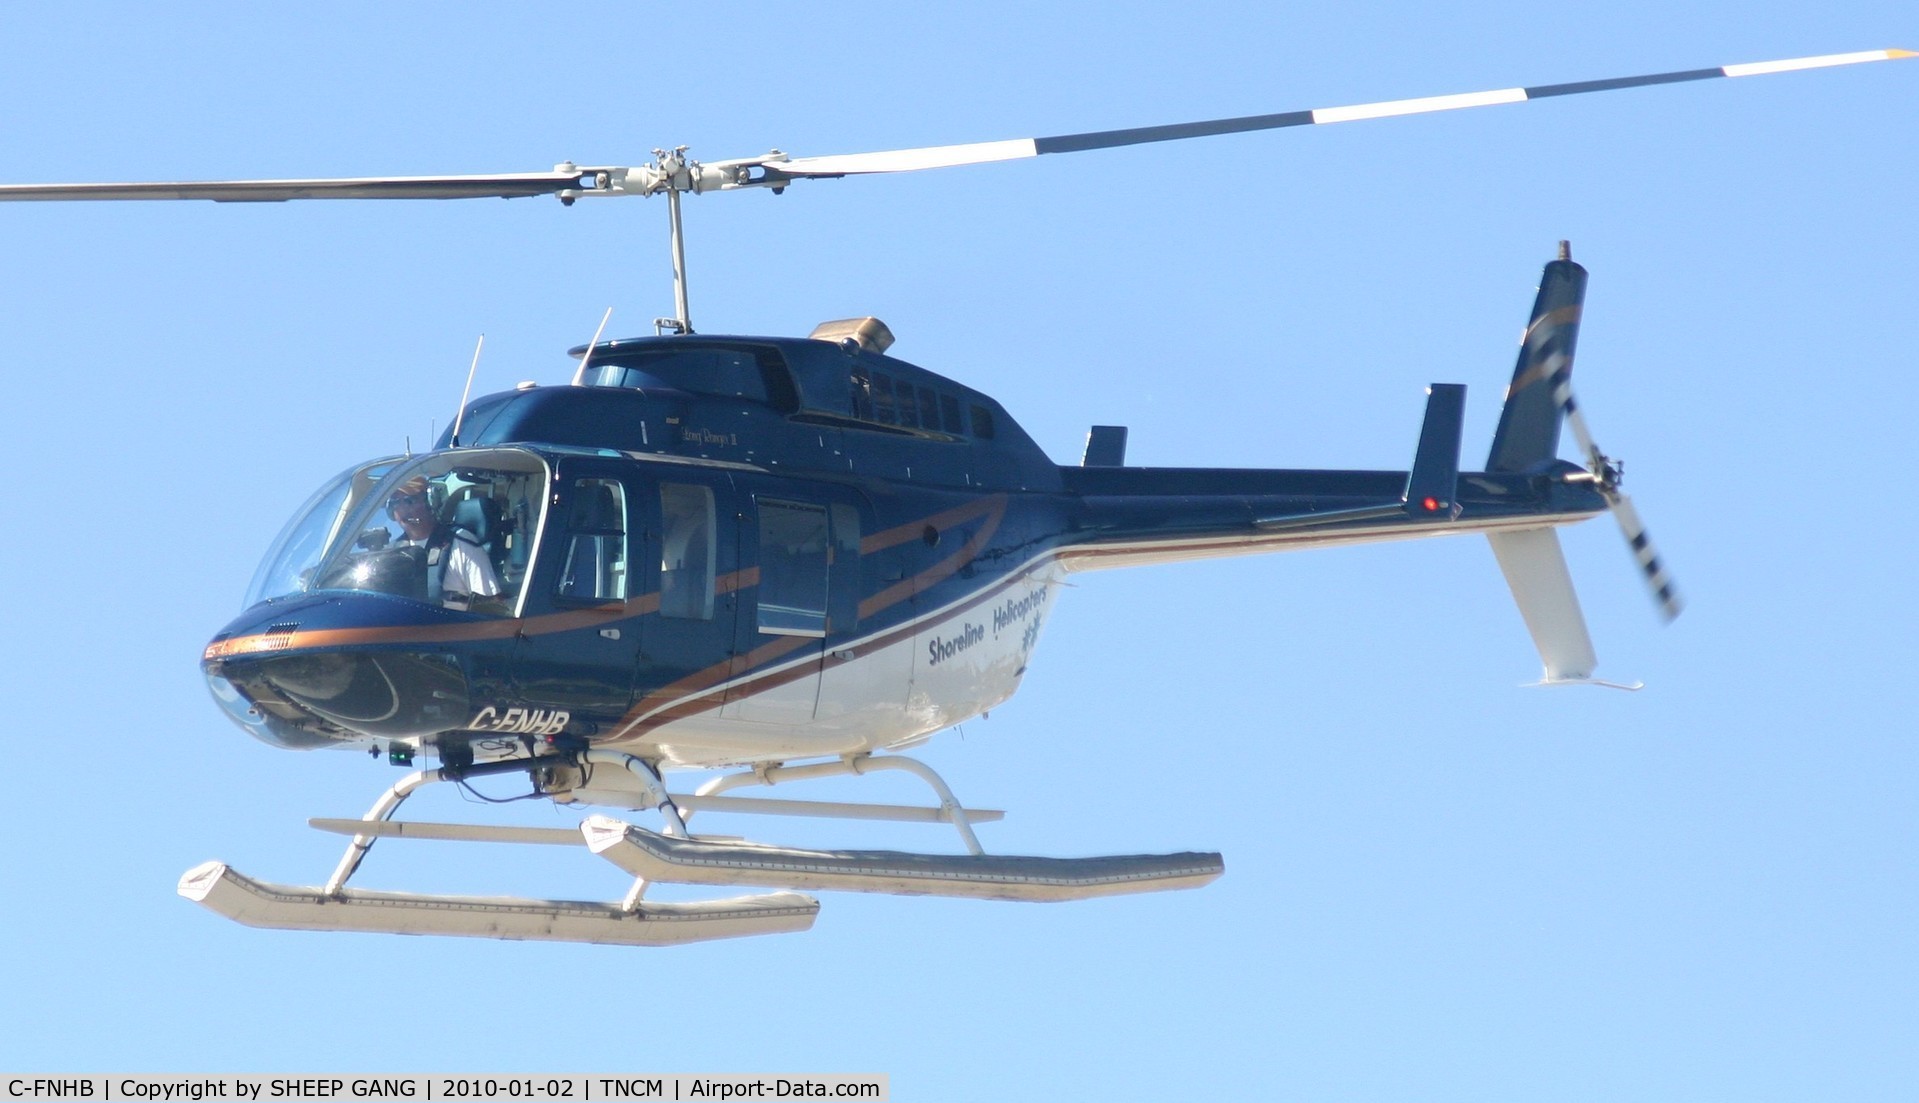 C-FNHB, 1981 Bell 206L-1 LongRanger II C/N 45661, C-FNHB departing the helipad on a trip